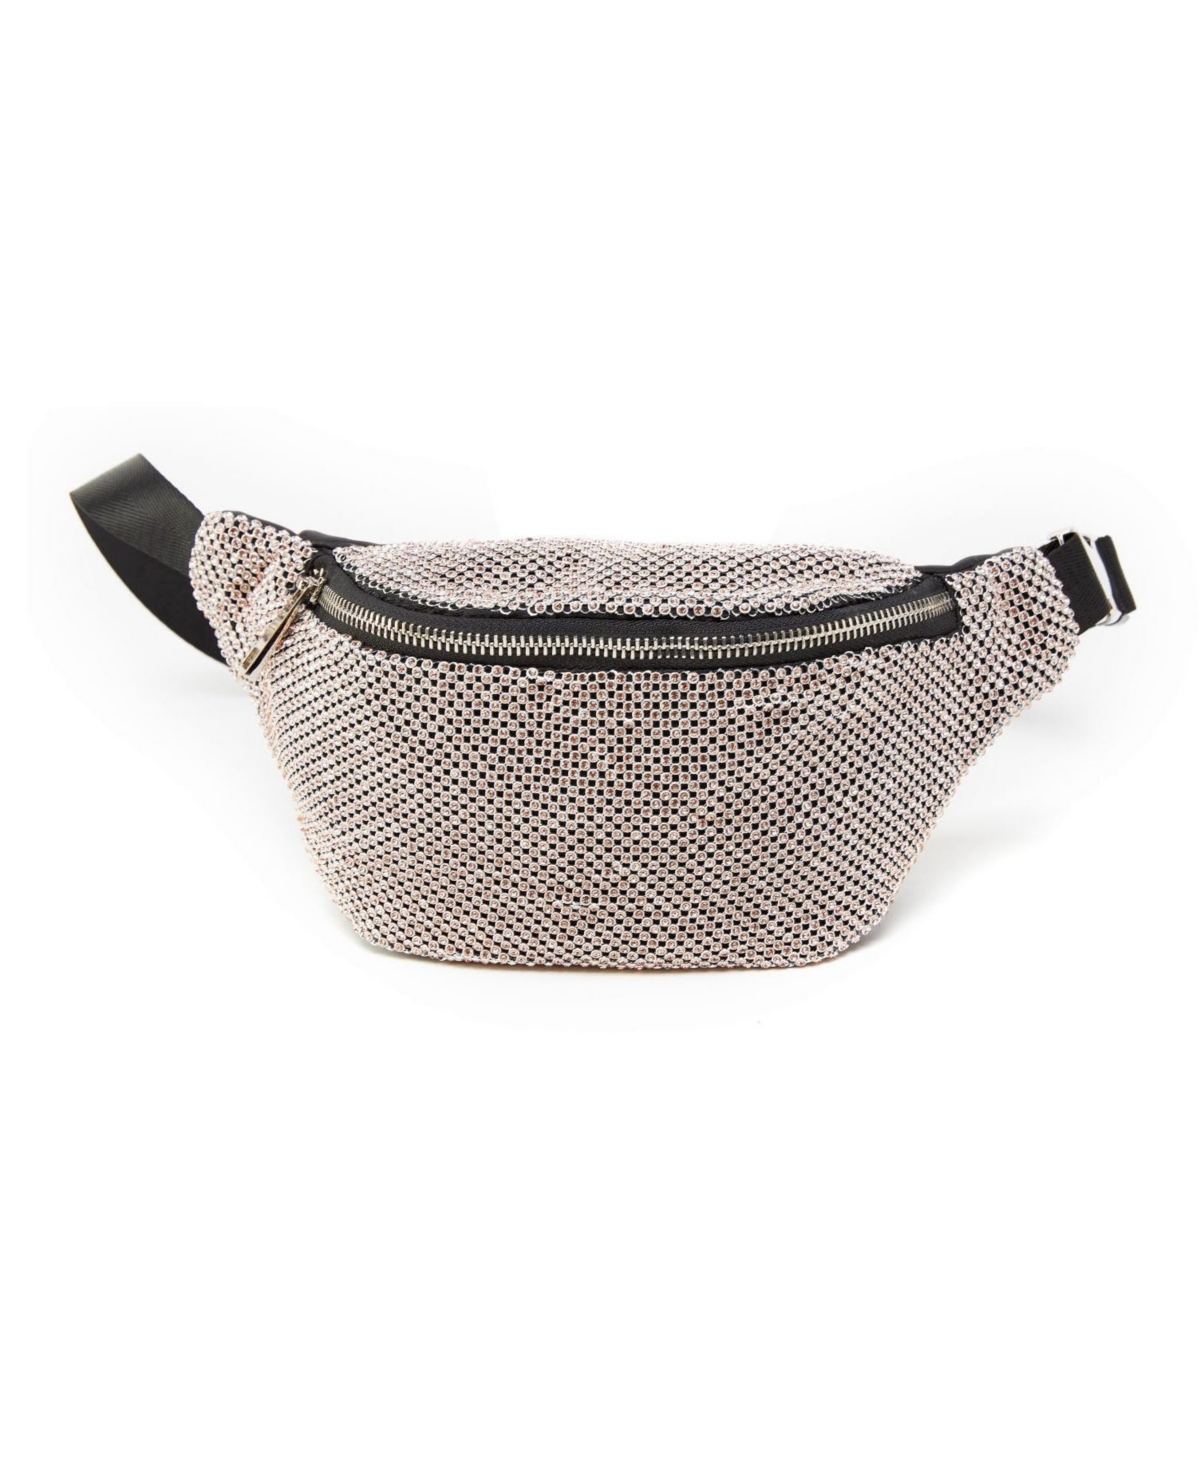 Cardi Bling Belt Bag - Silver-Tone